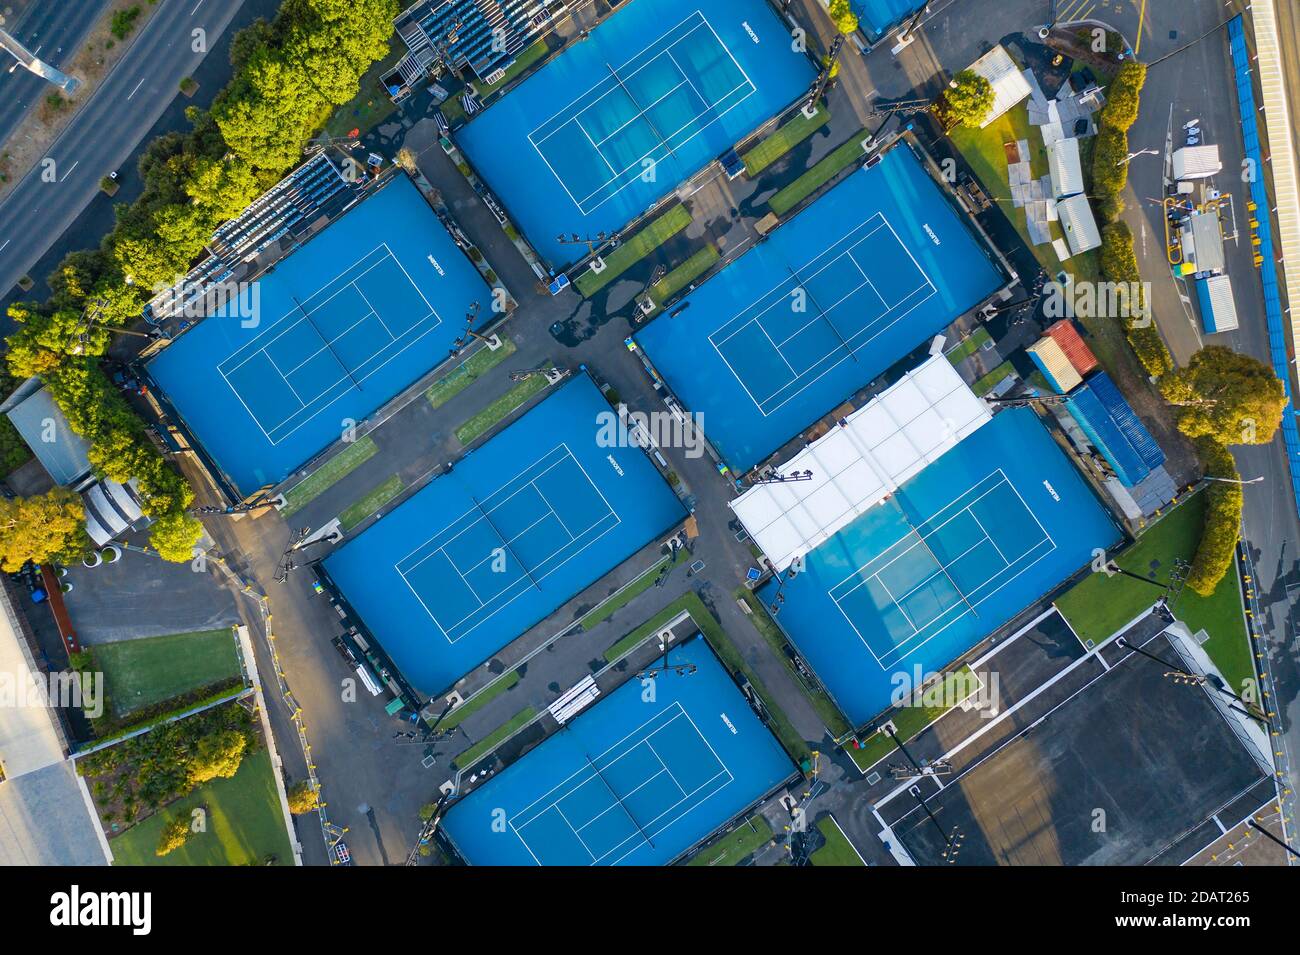 Canchas de tenis de melbourne fotografías e imágenes de alta resolución -  Alamy